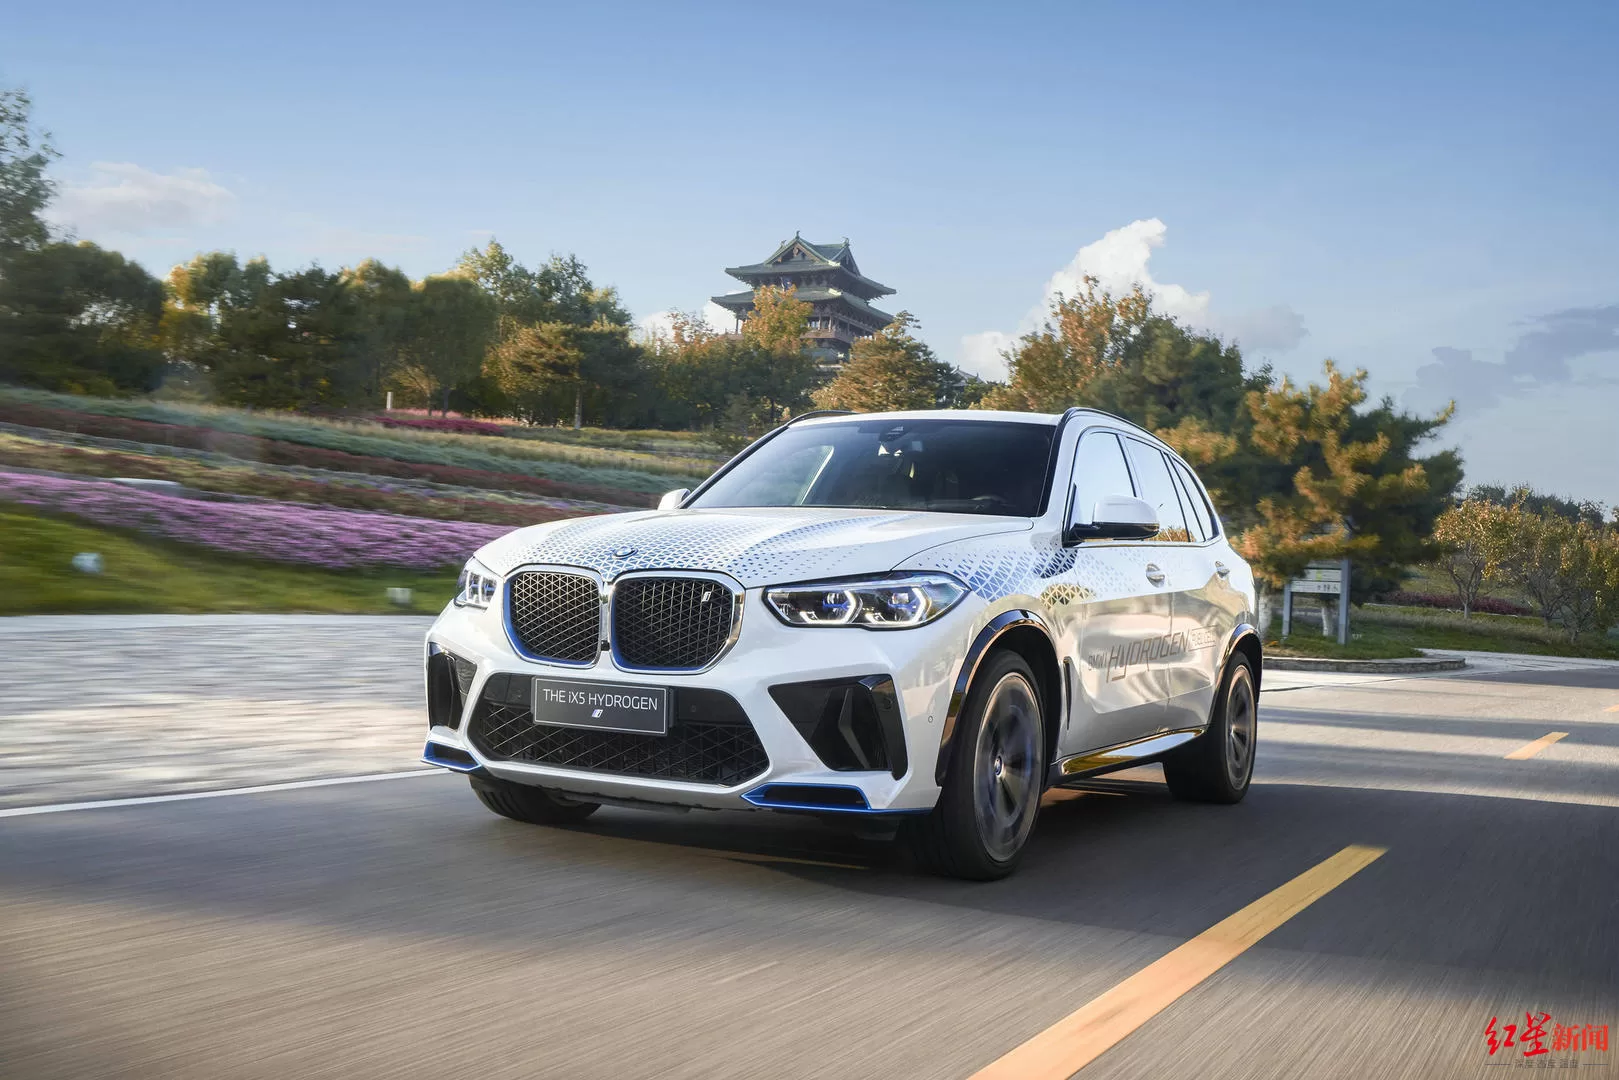 BMW Unveils Next Generation Concept Car at 2024 Beijing Auto Show - What's New?